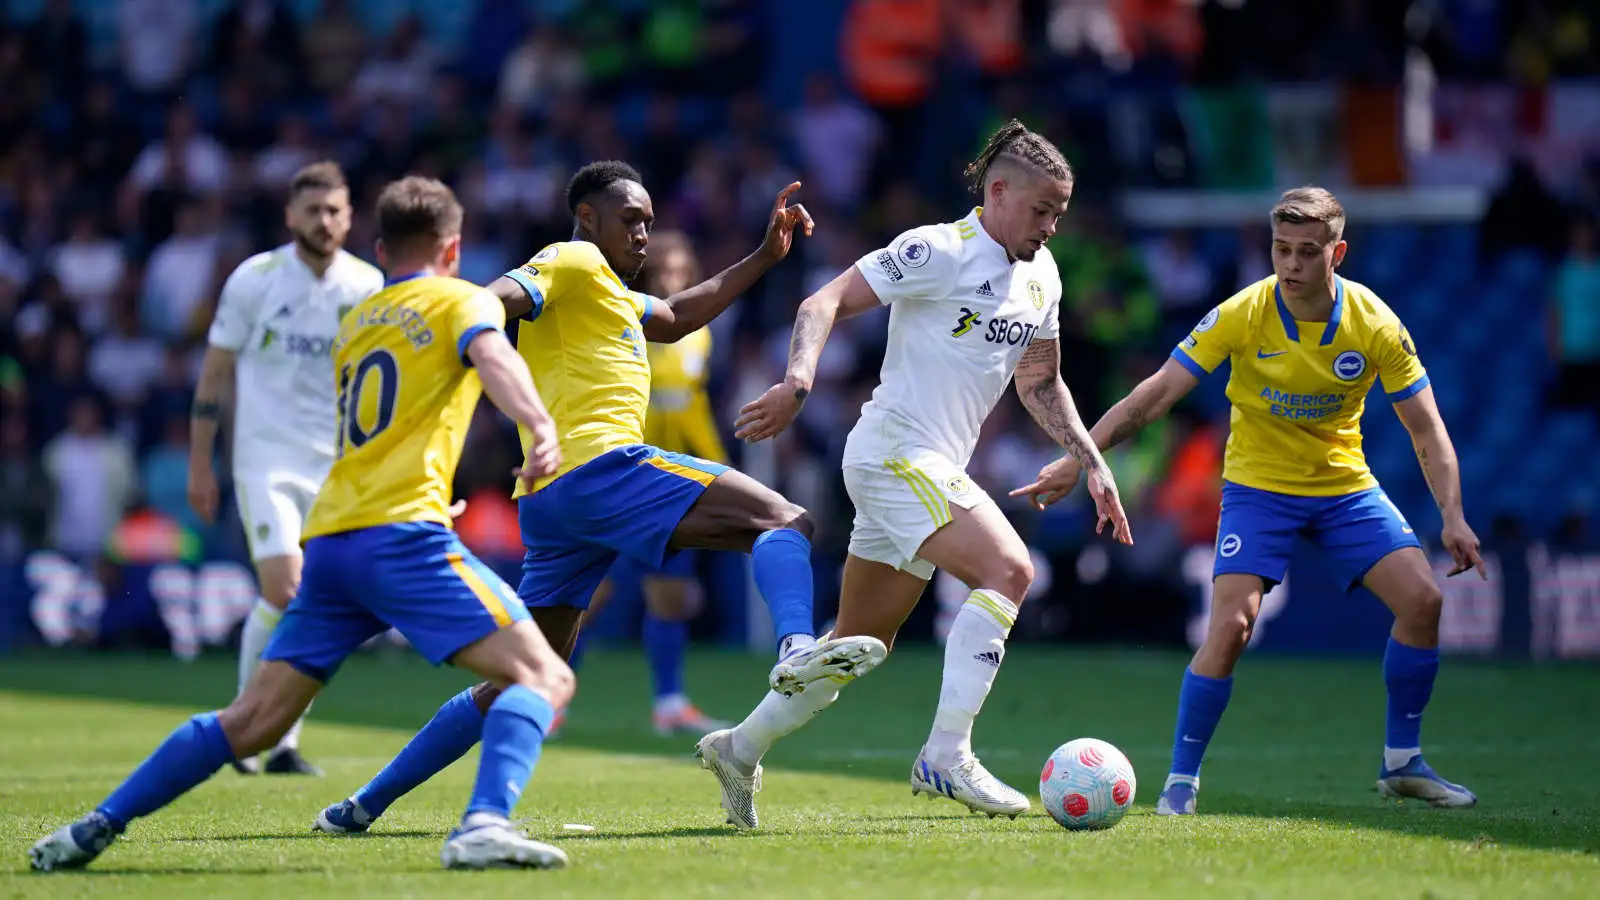 Leeds United's Kalvin Phillips under pressure against Brighton at Elland Road